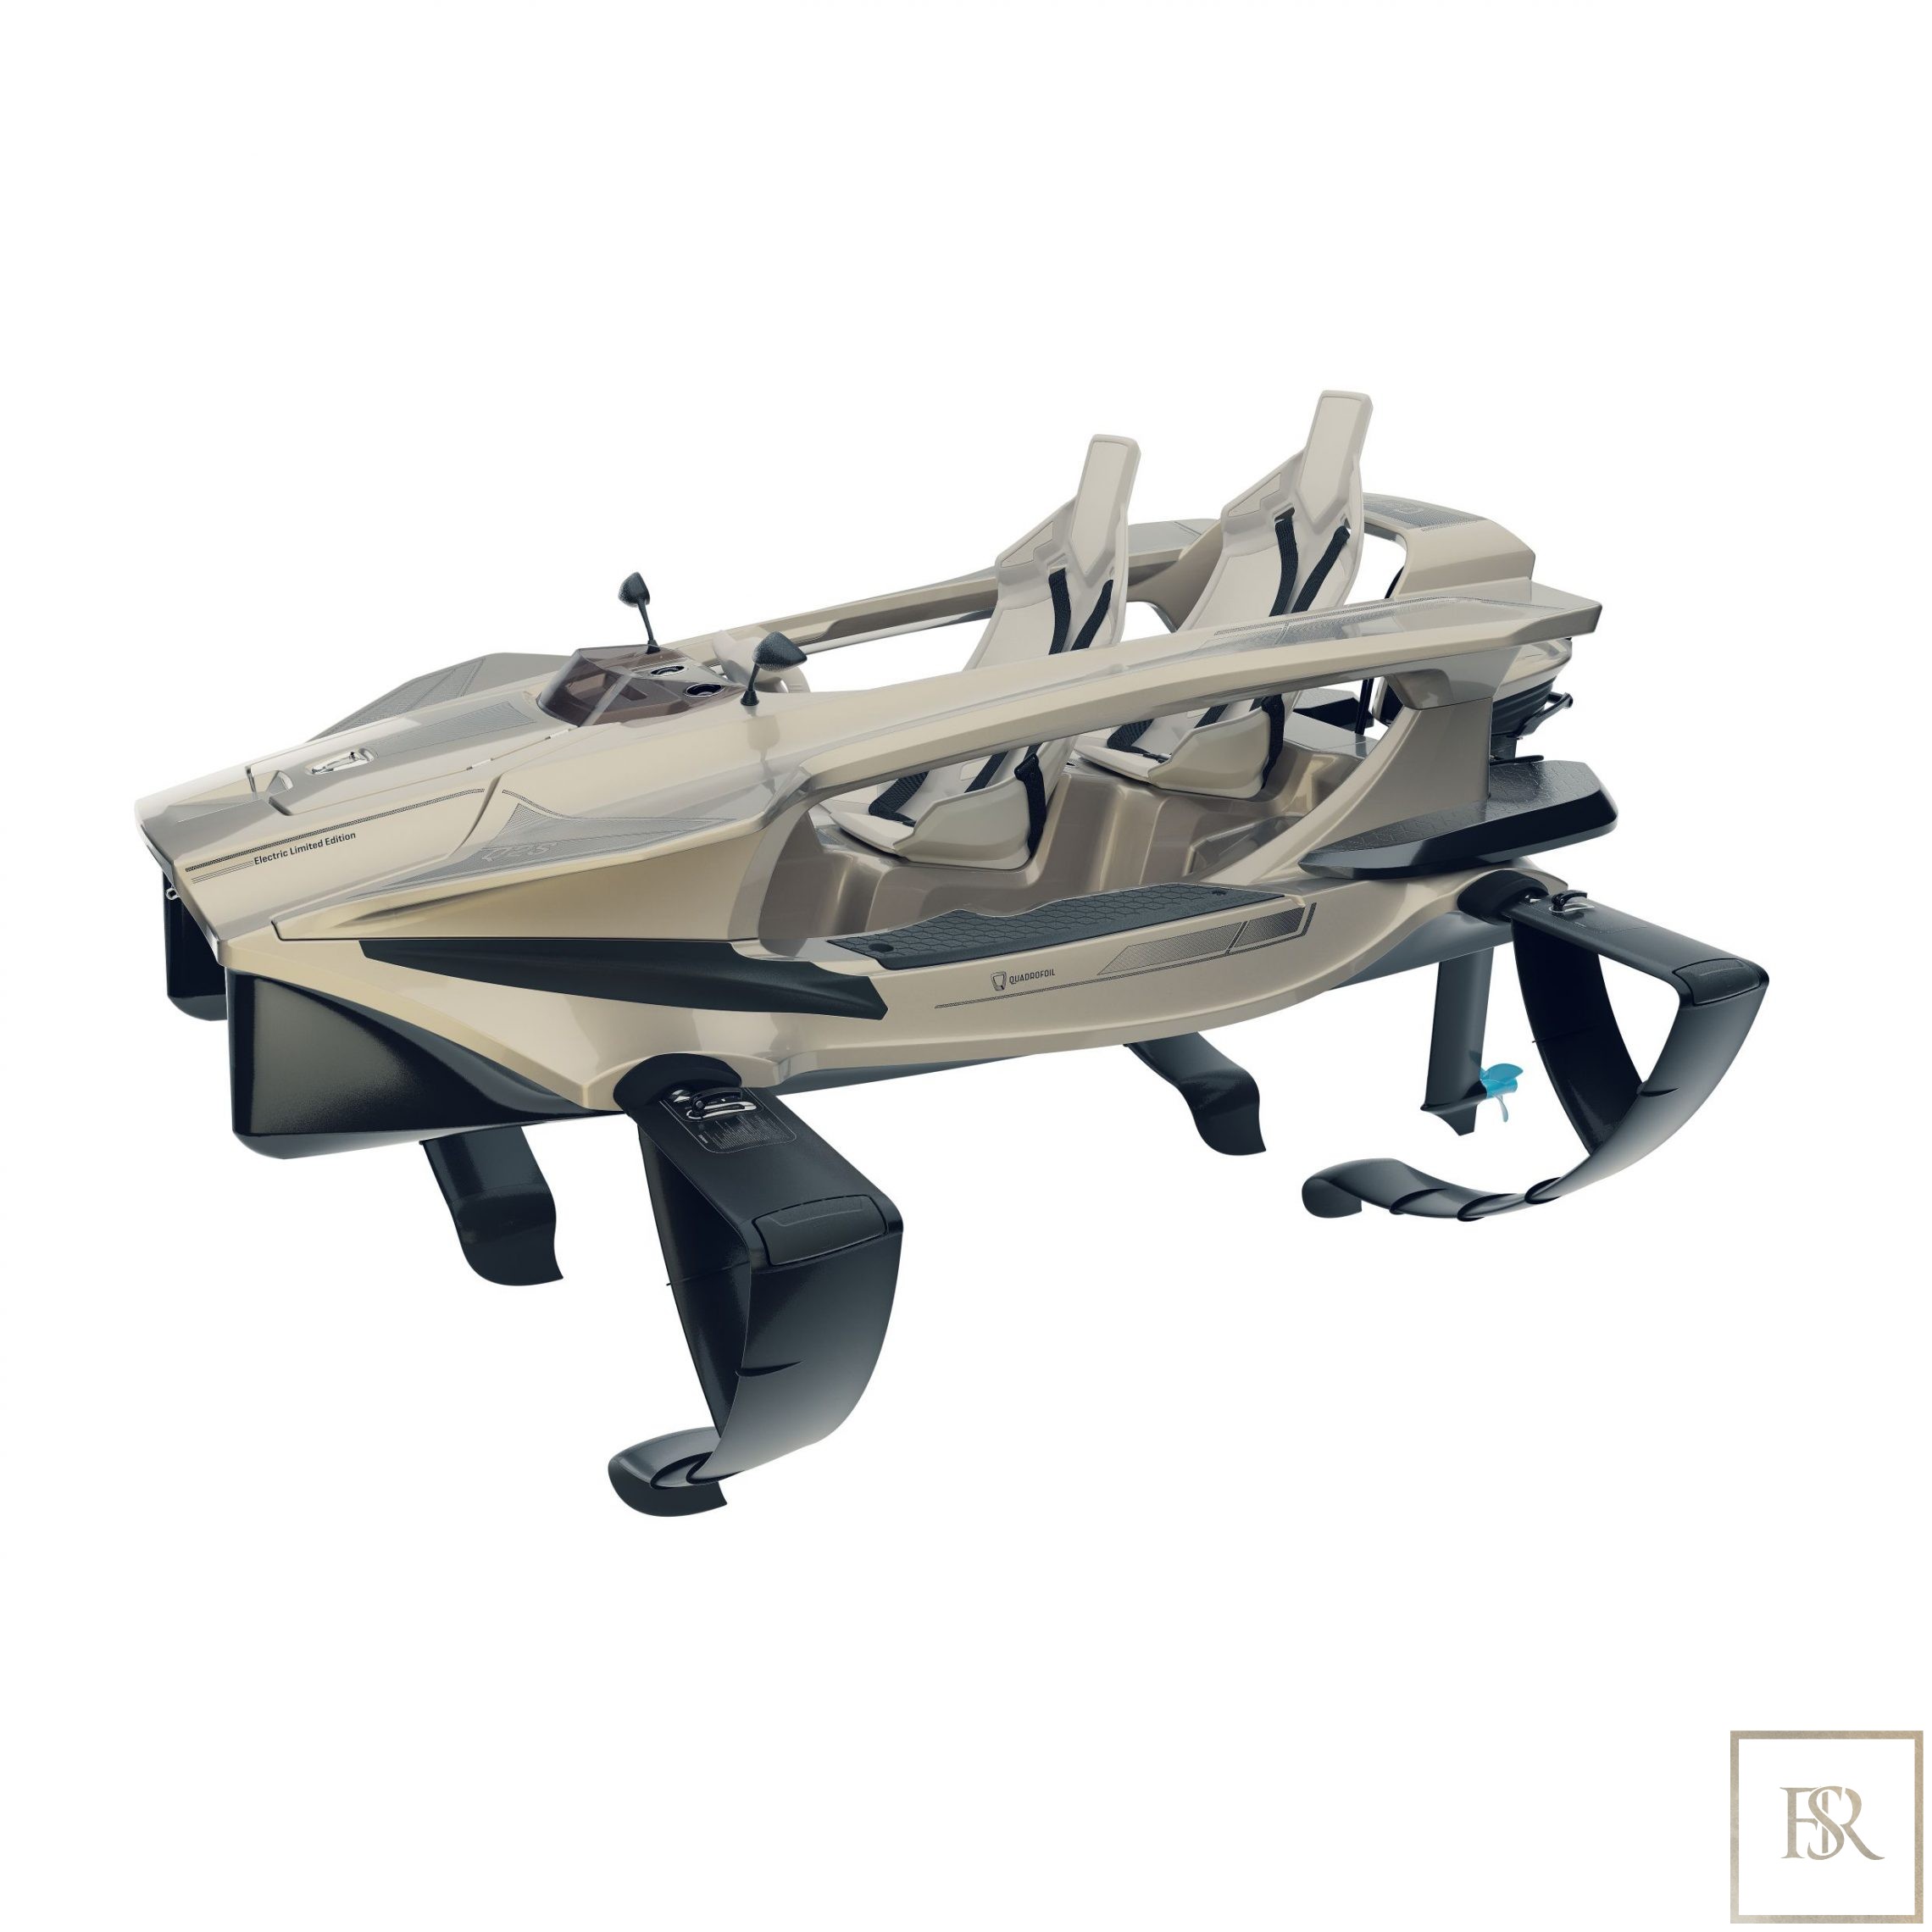 Electric boat - Quadrofoil Q2S Limited Edition for sale For Super Rich